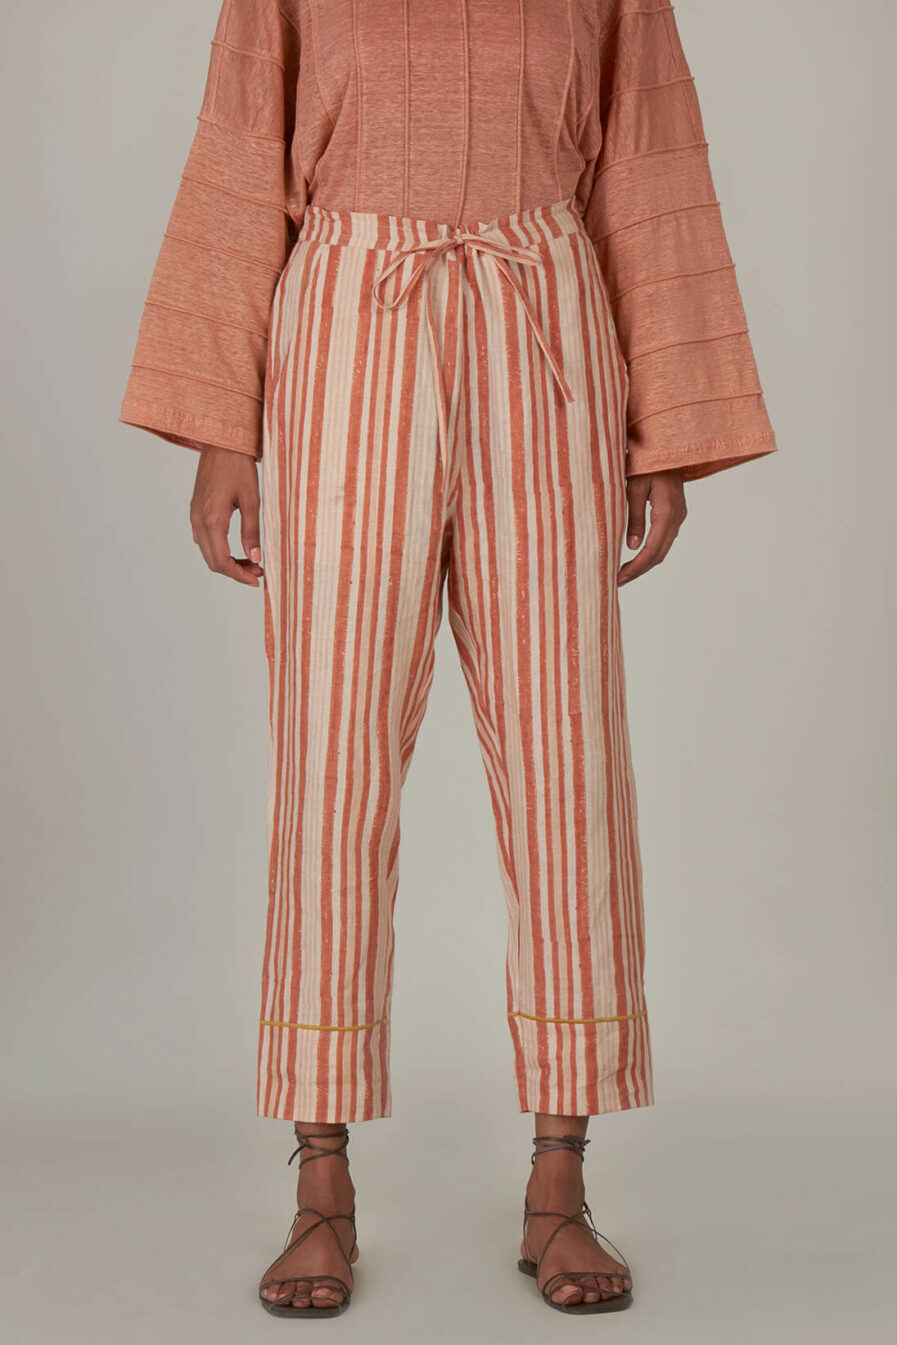 Anavila Peach Block Printed Stripes Organic Linen Trouser